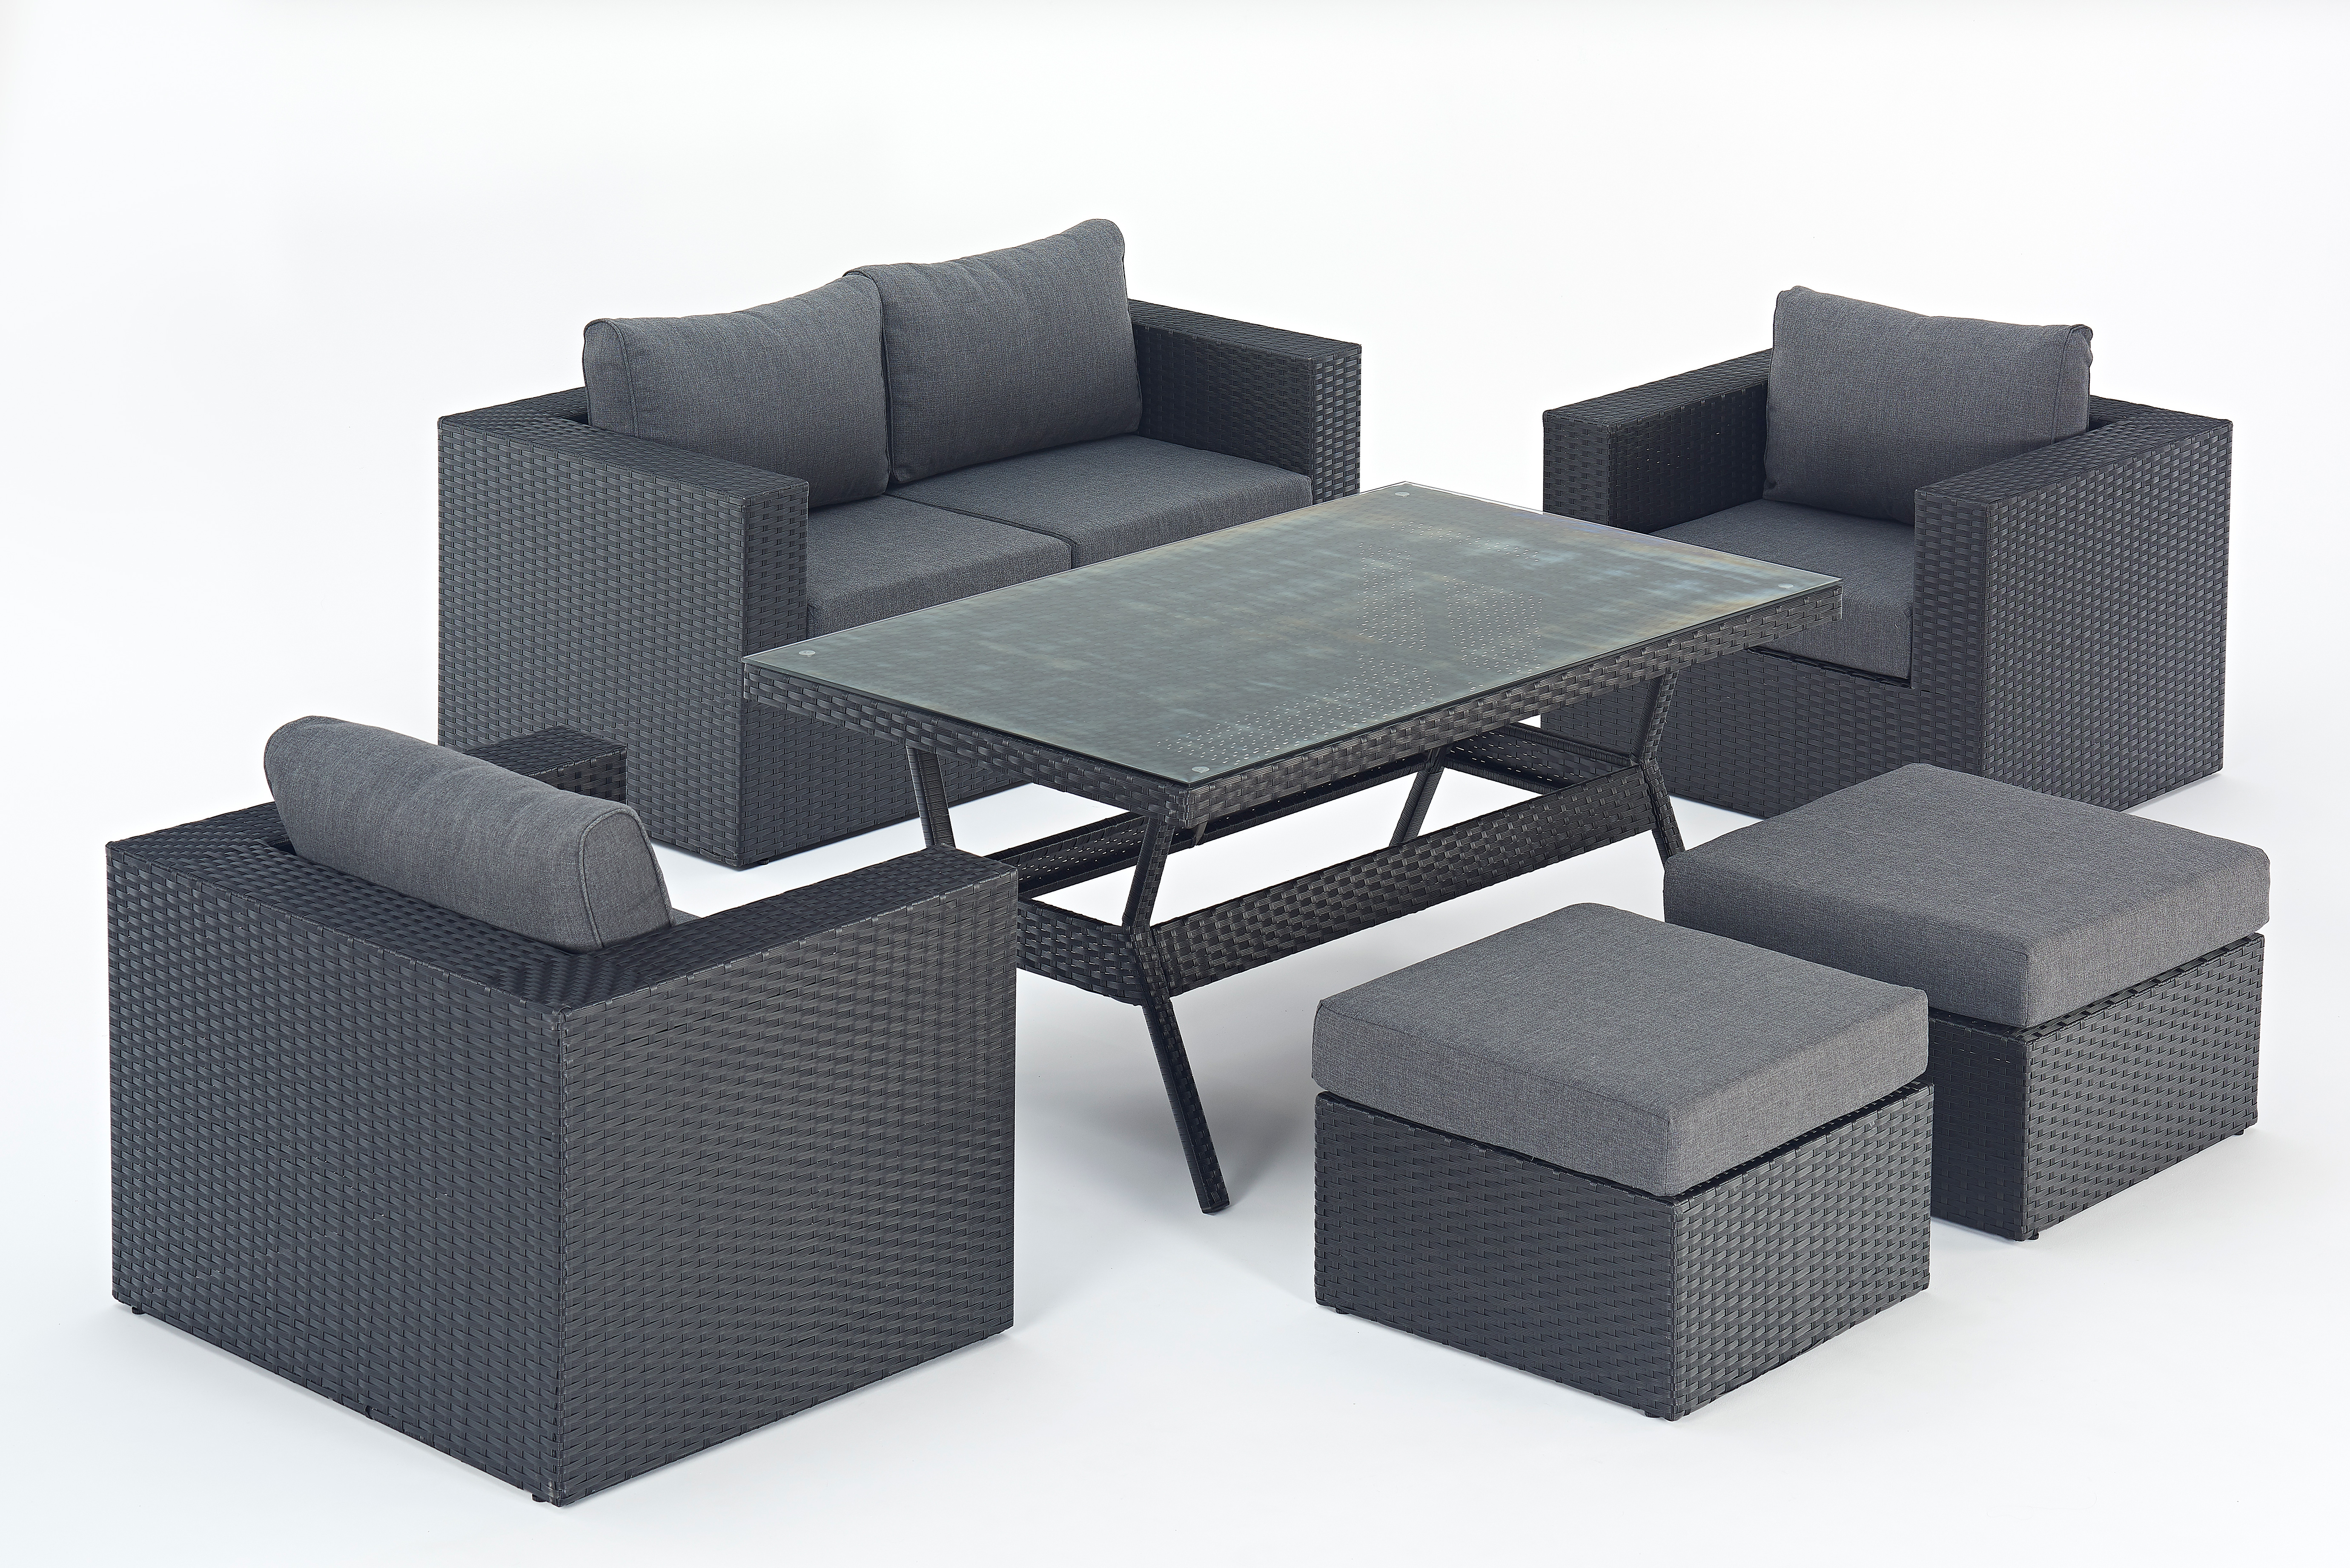 Prestige Sofa Table Set Rattan Outdoor Living Garden Furniture within size 5520 X 3684